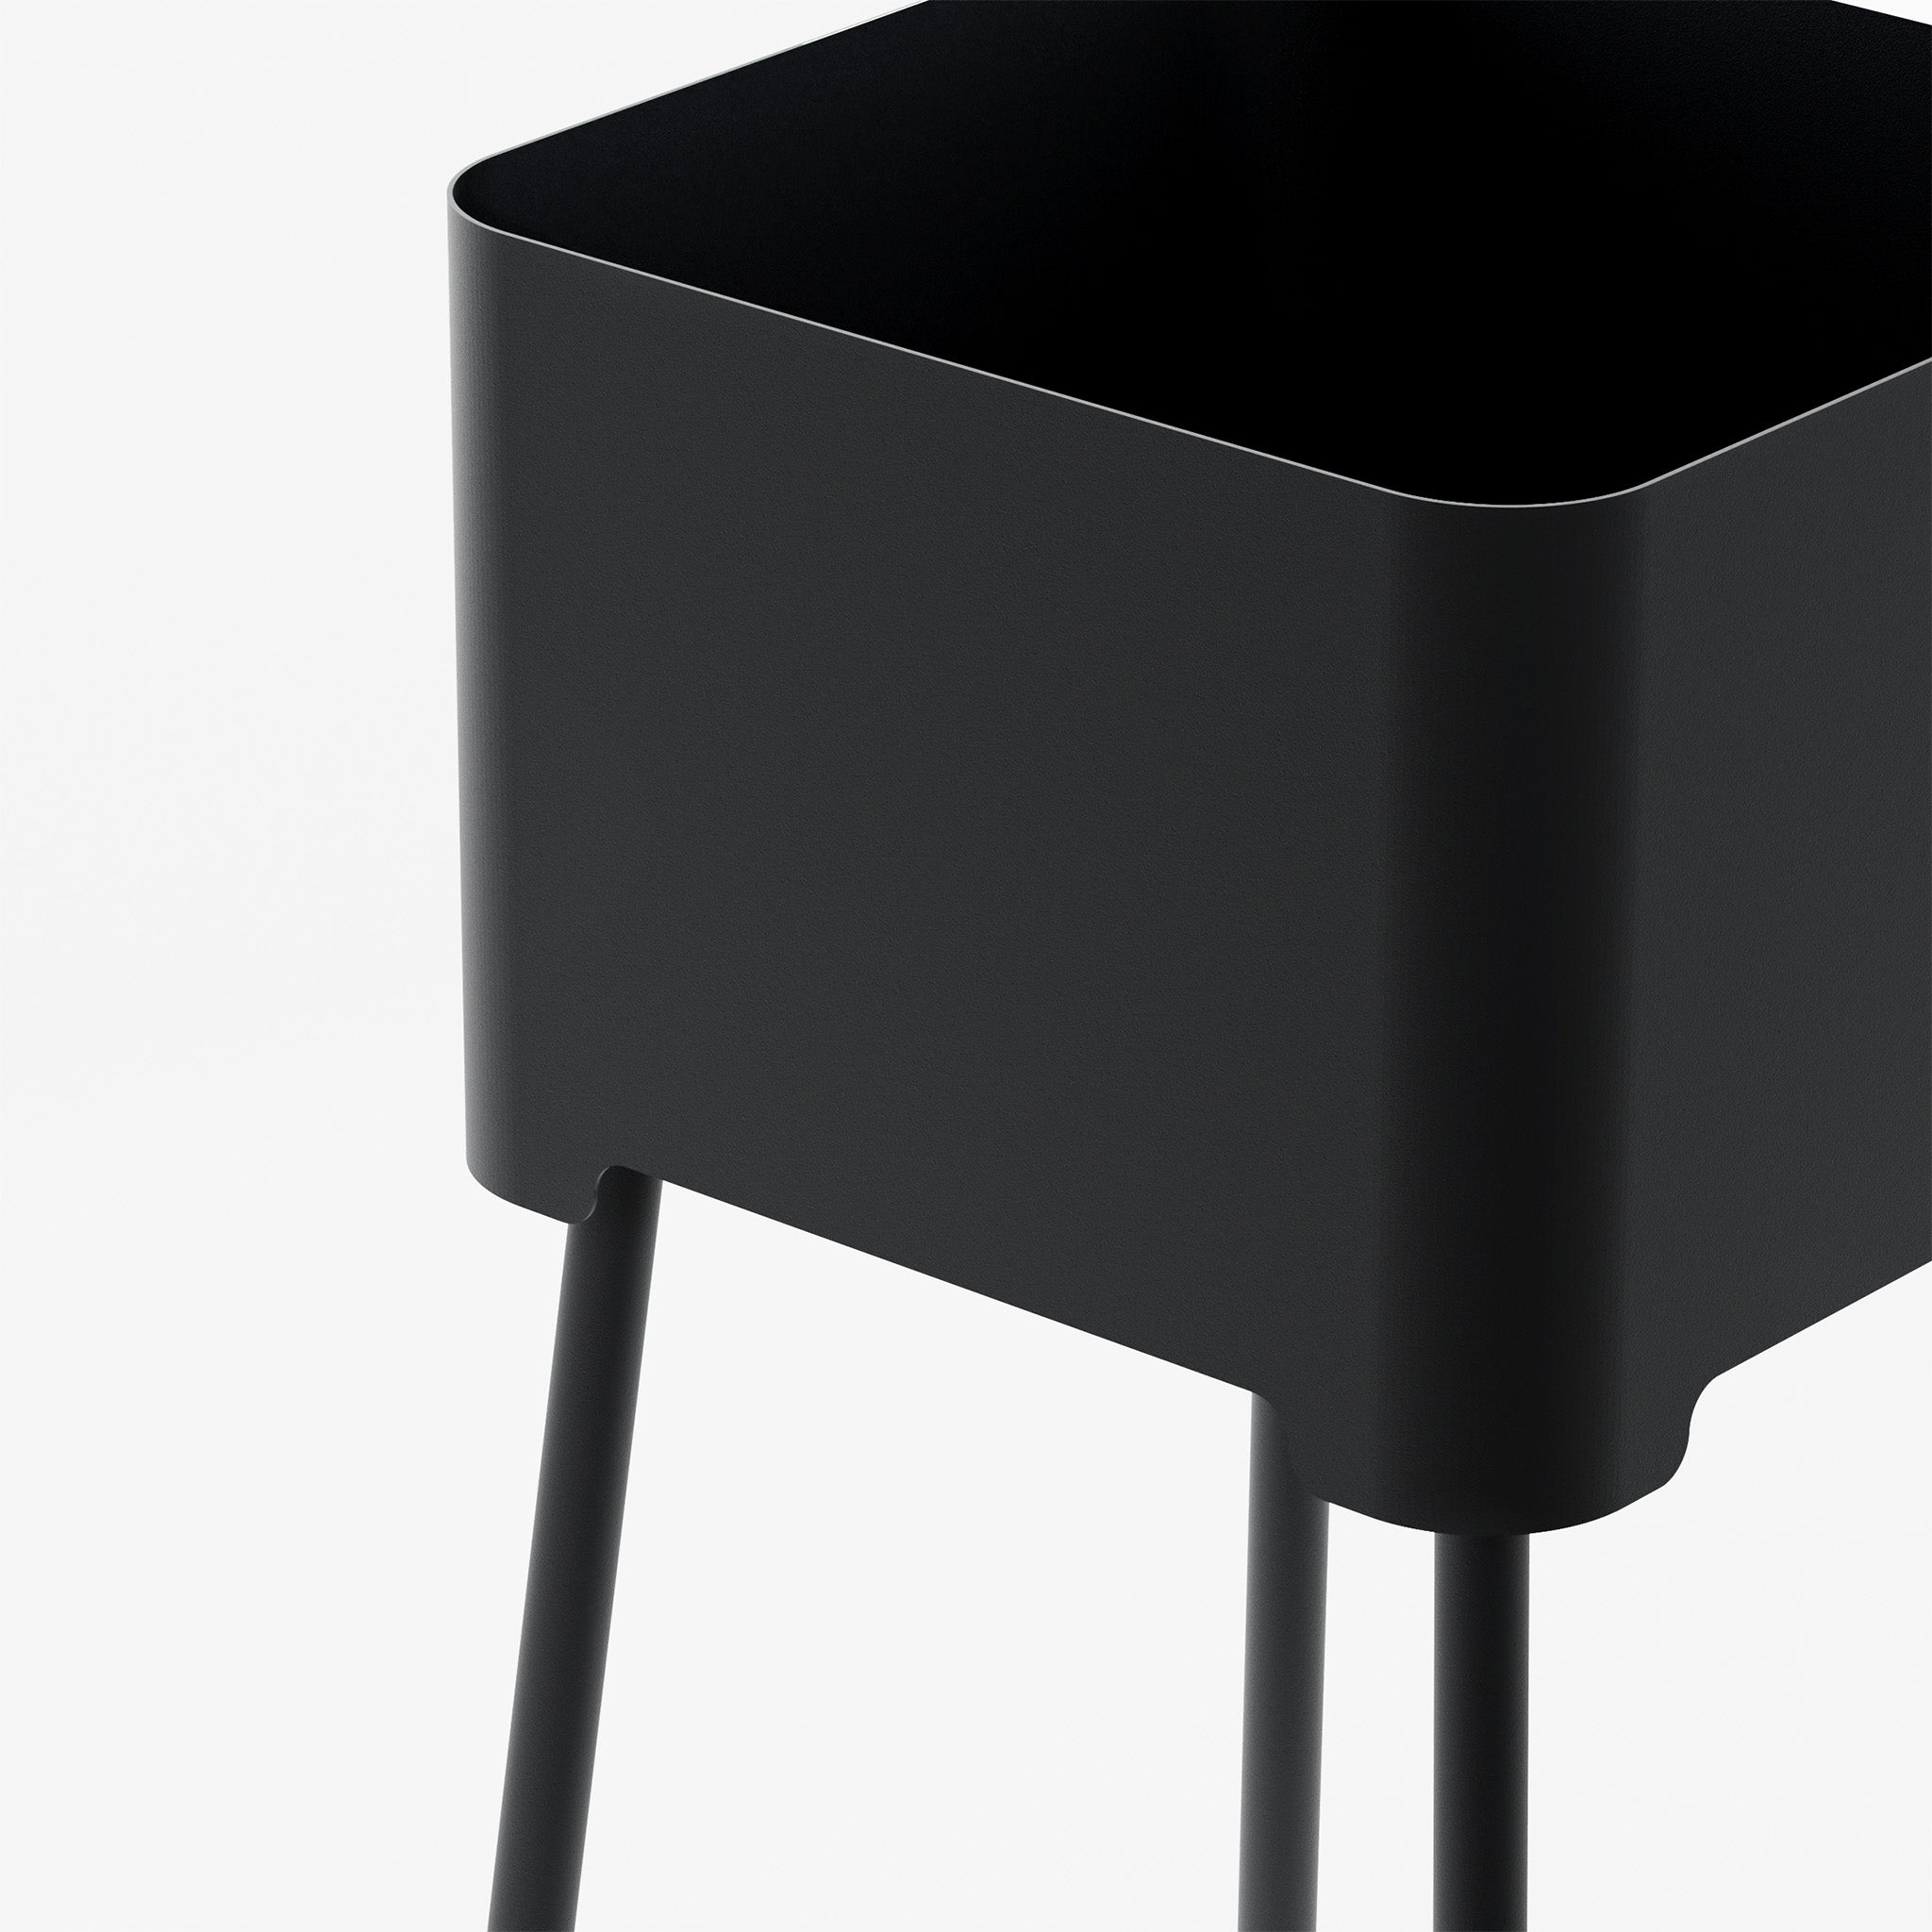 Altea square pot holder and tray set - Graphite Black